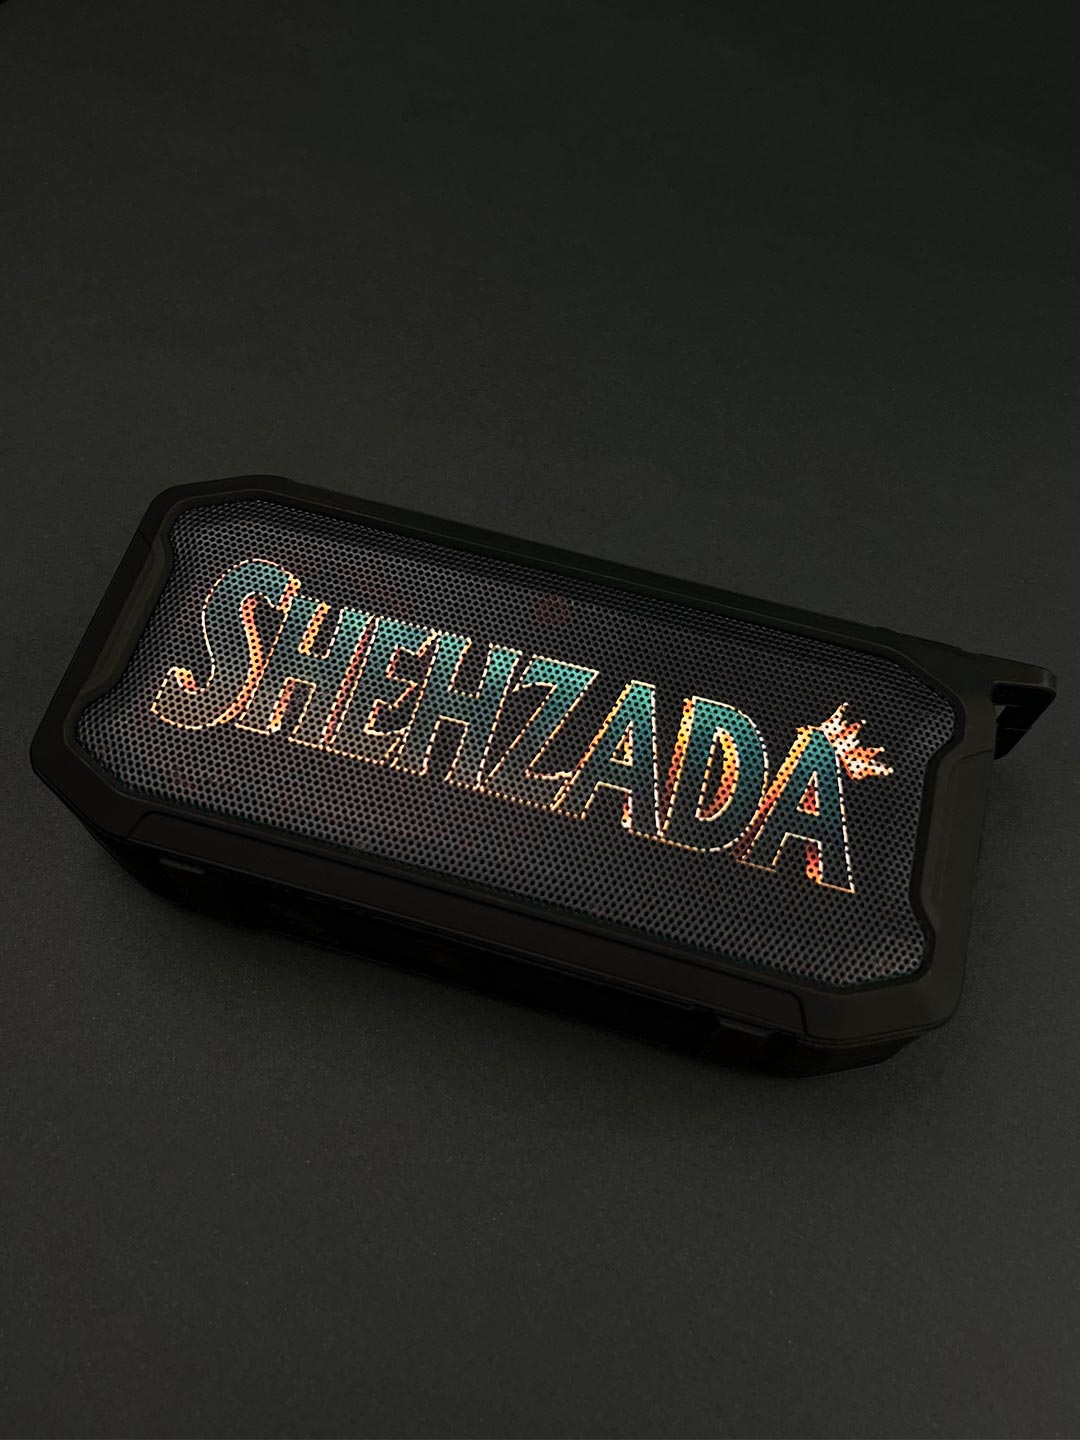 Shehzada Limited Edition - Gift Box